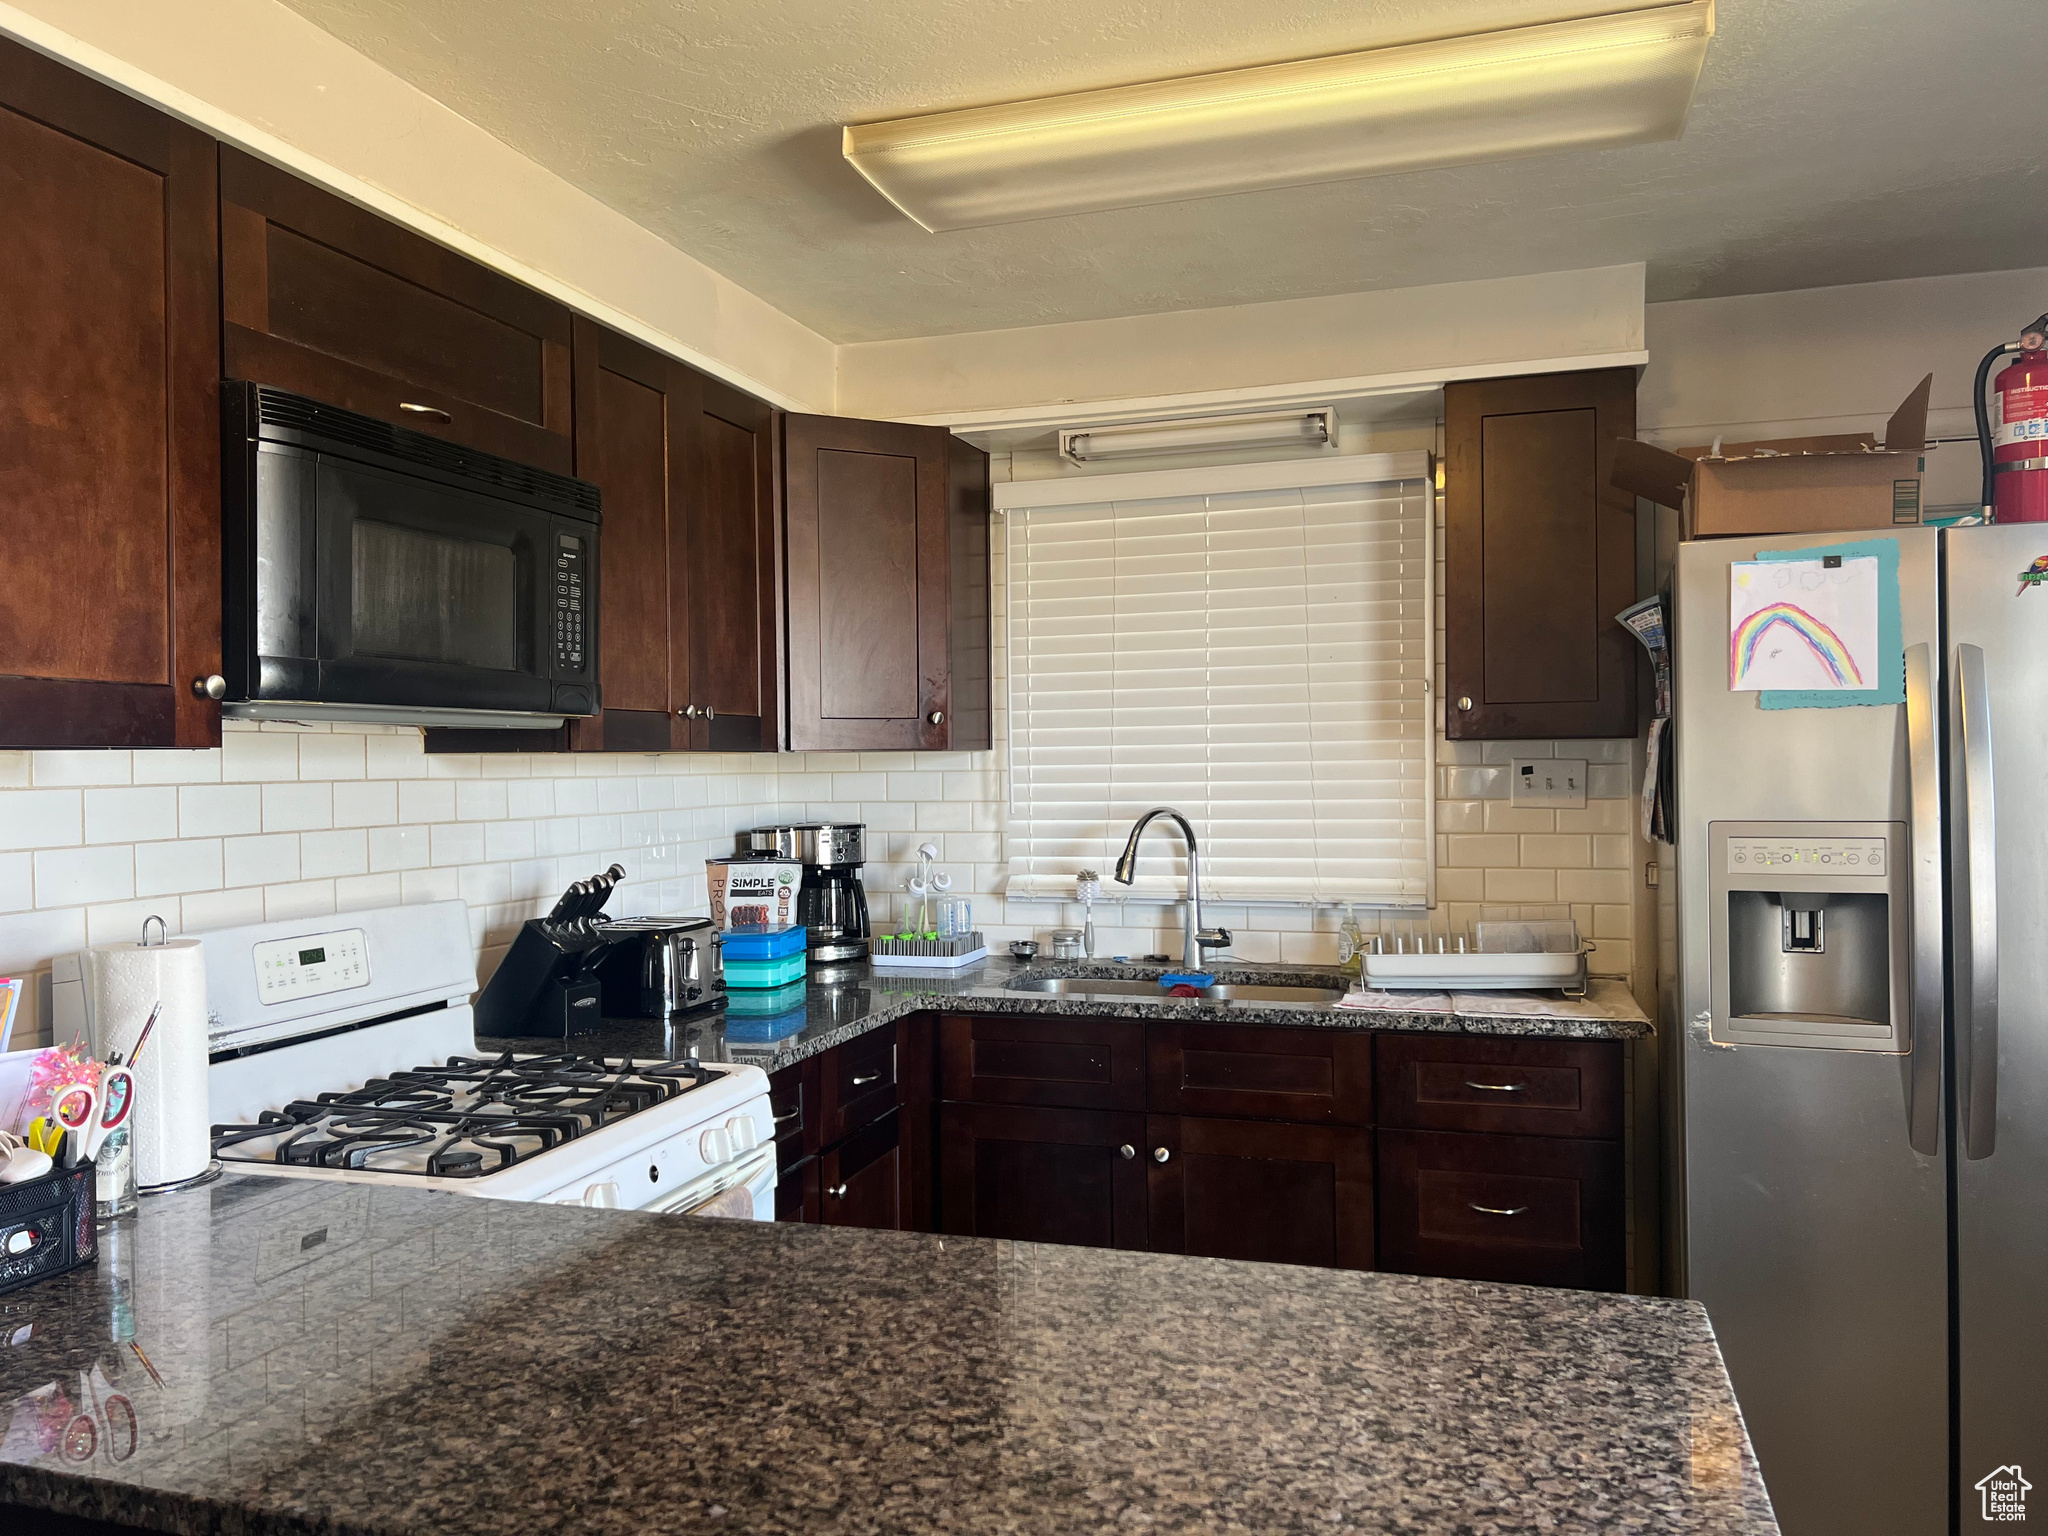 Kitchen featuring sink, stainless steel fridge, backsplash, and white gas range